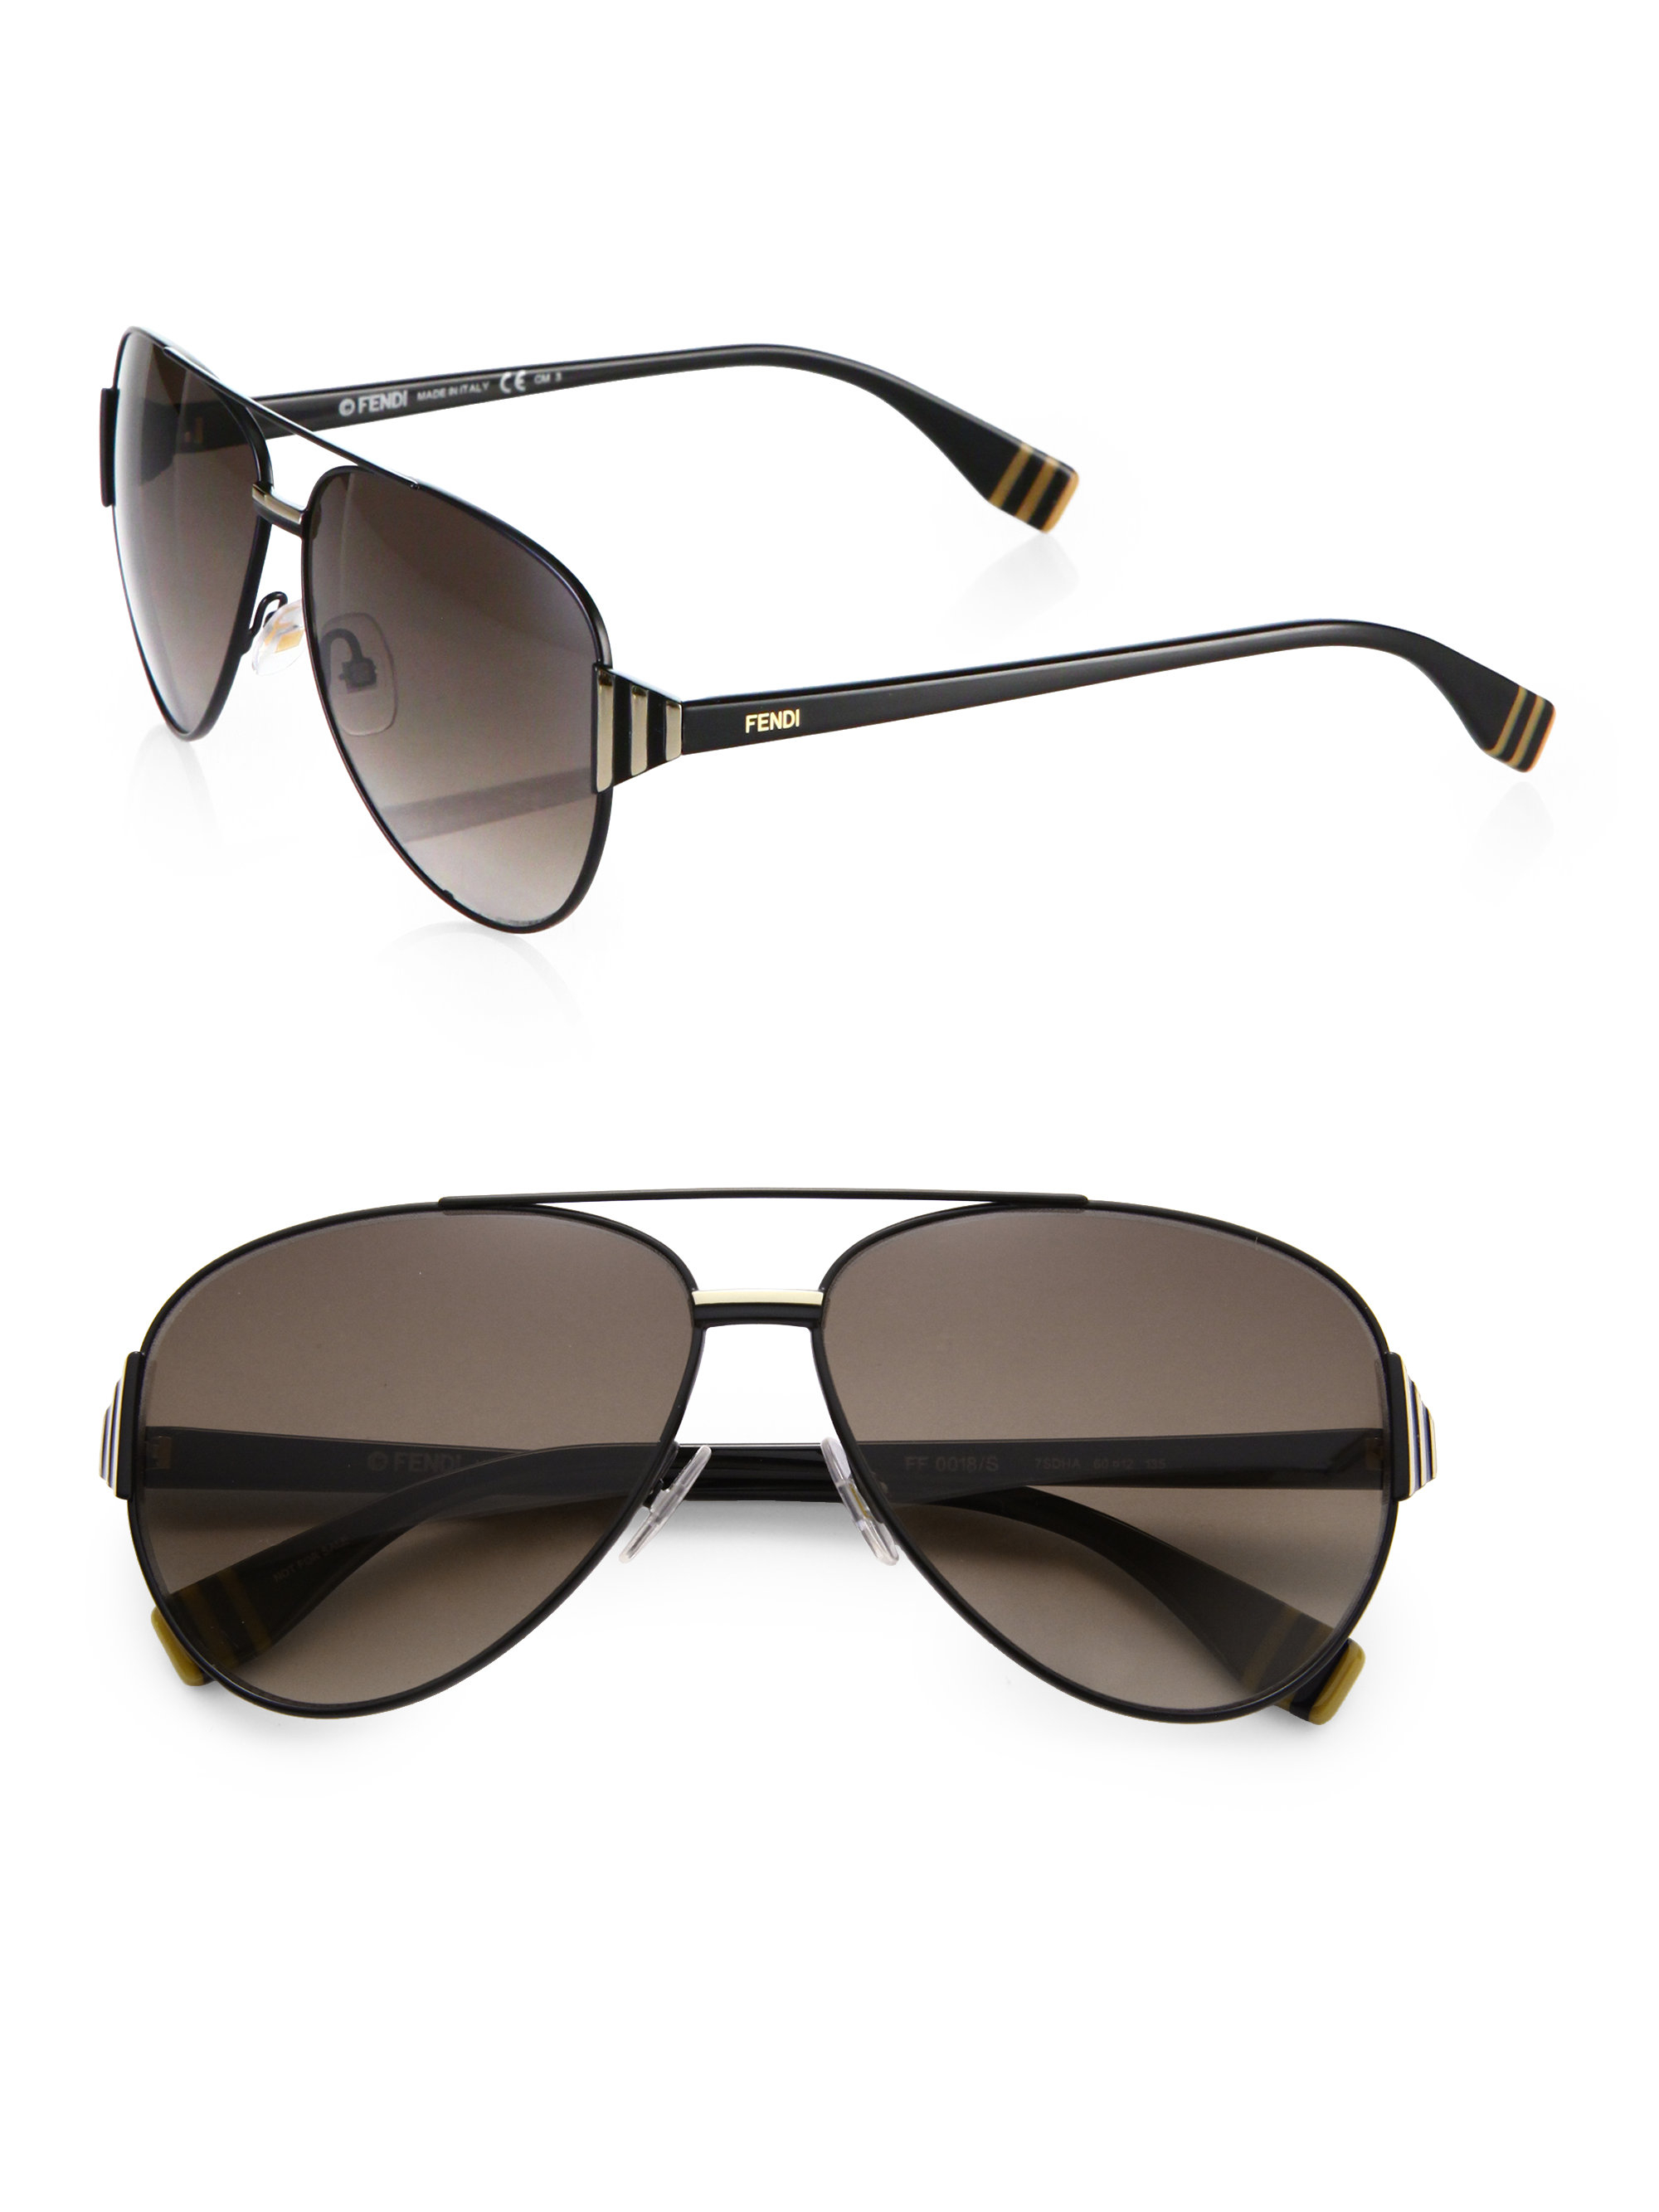 Fendi Metal & Acetate Aviator Sunglasses in Black - Lyst